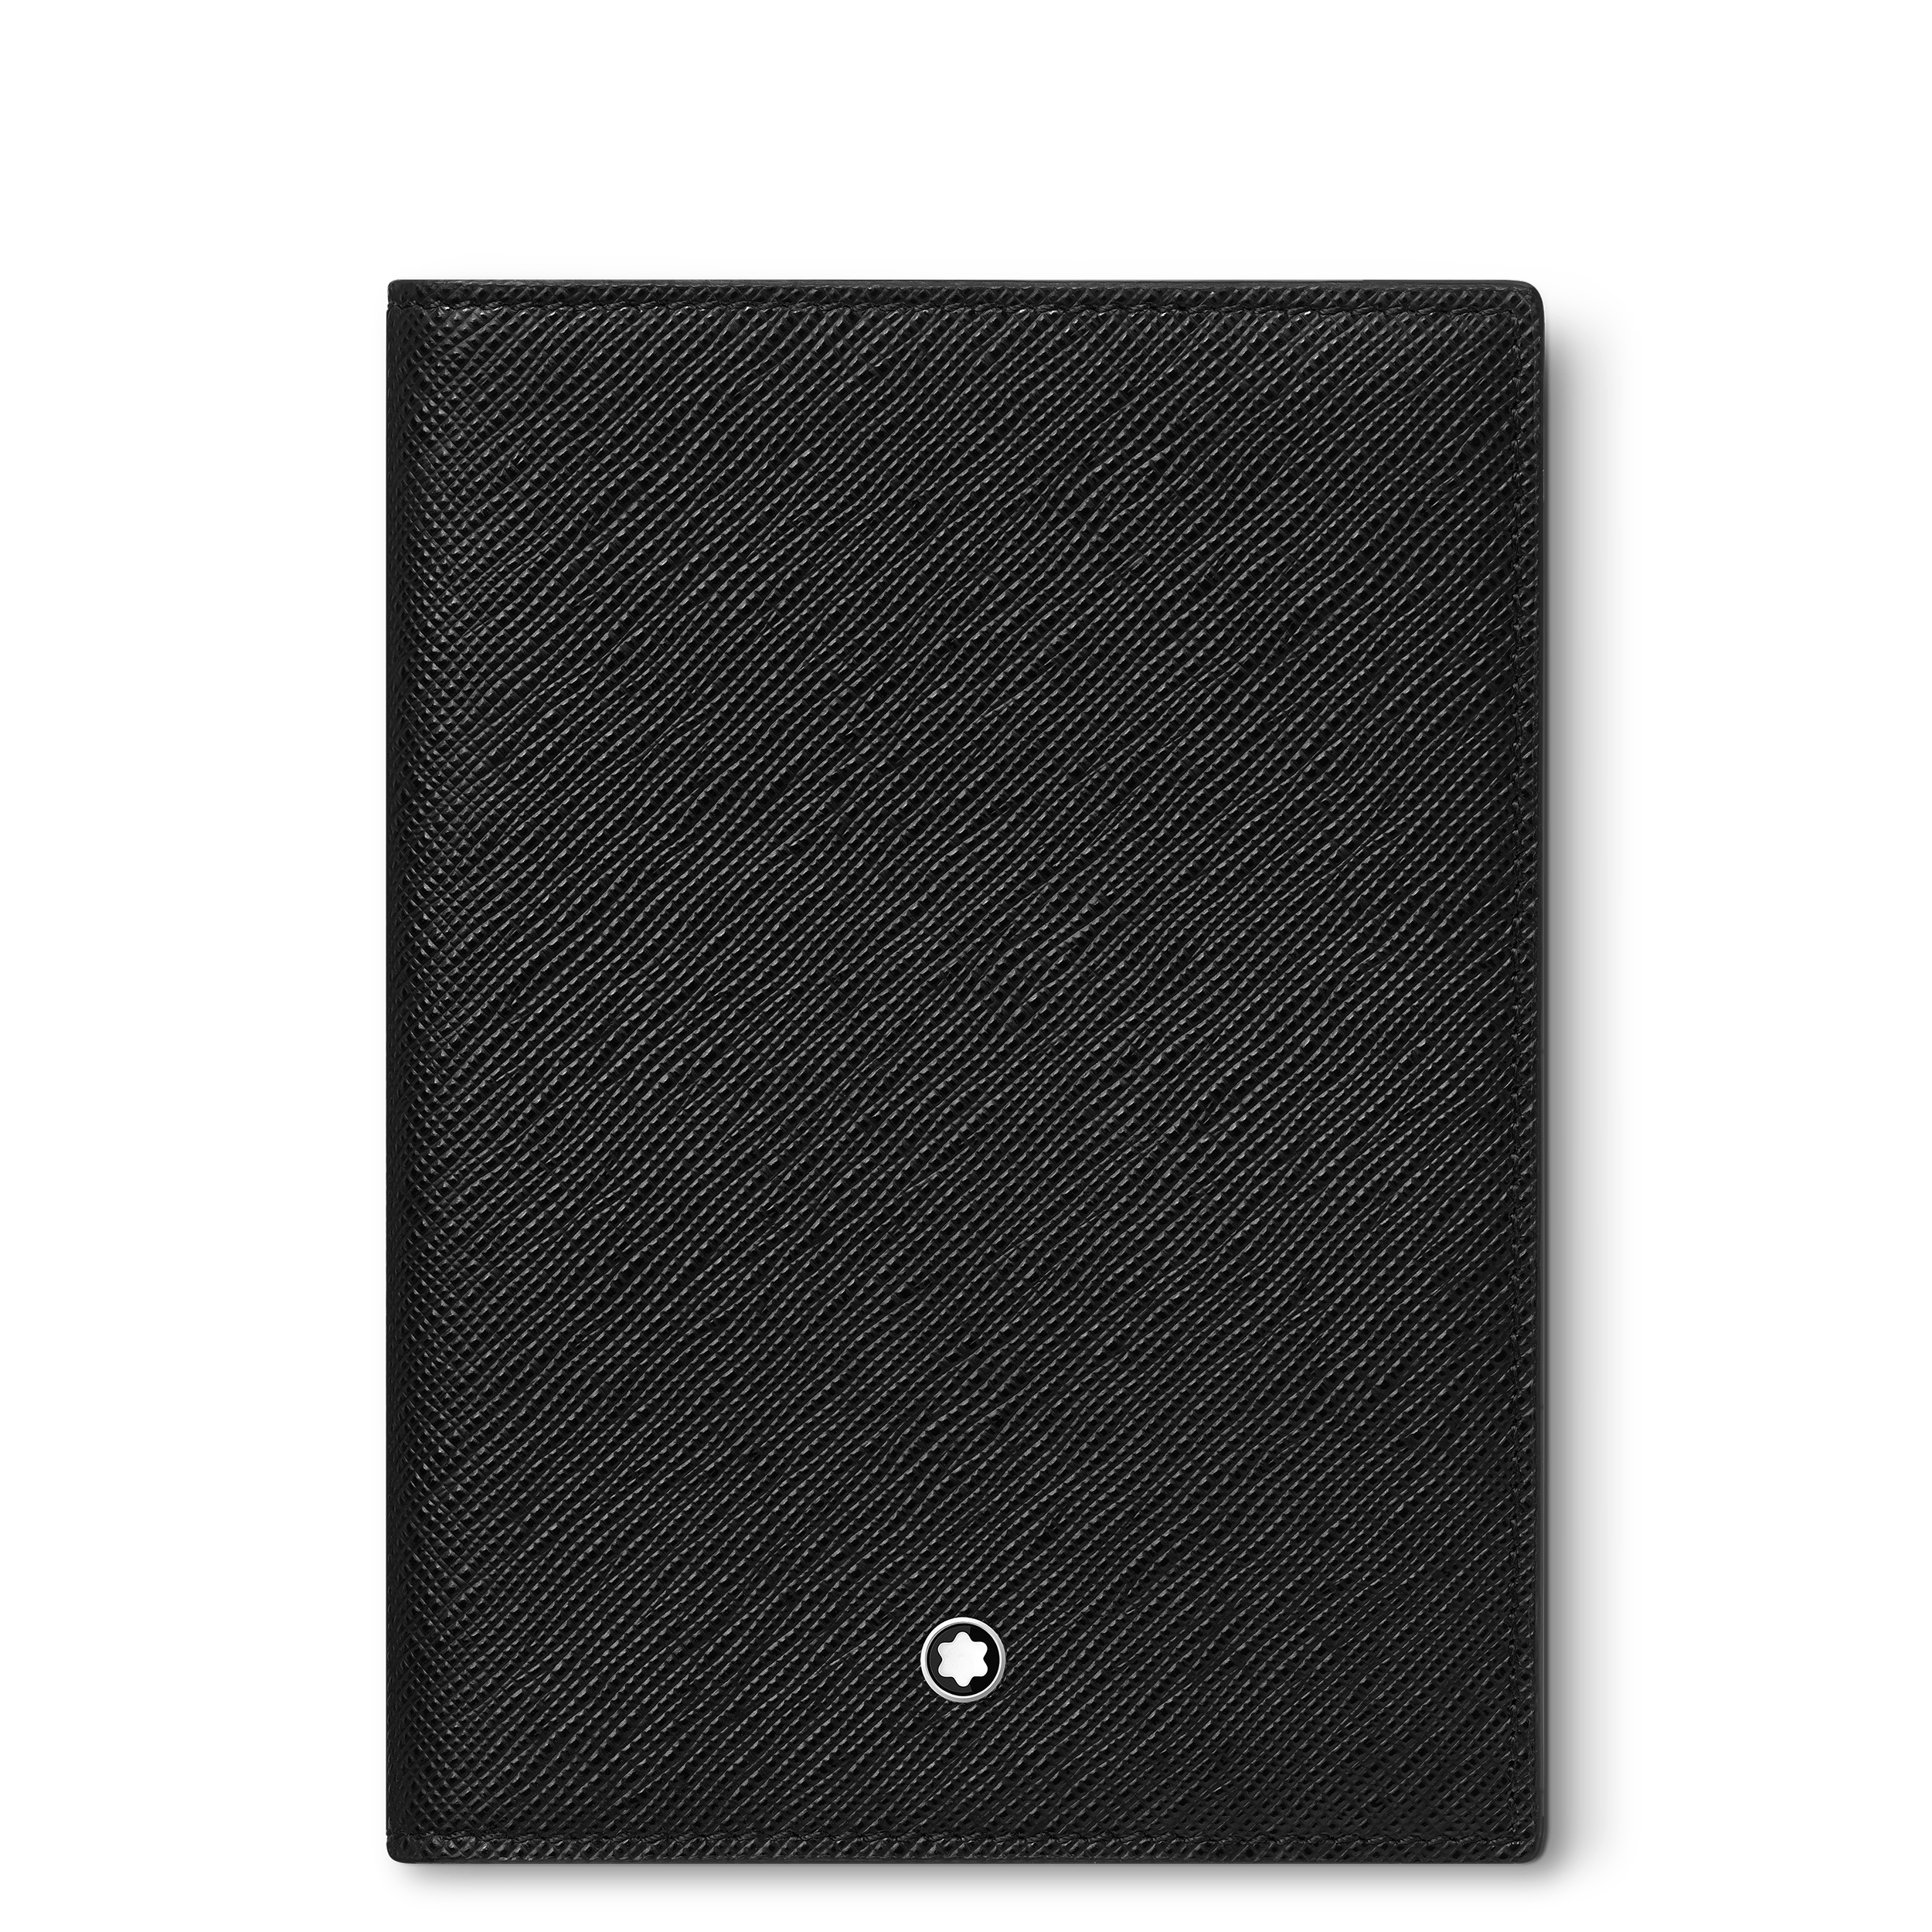 Porte-passeport Sartorial cuir noir